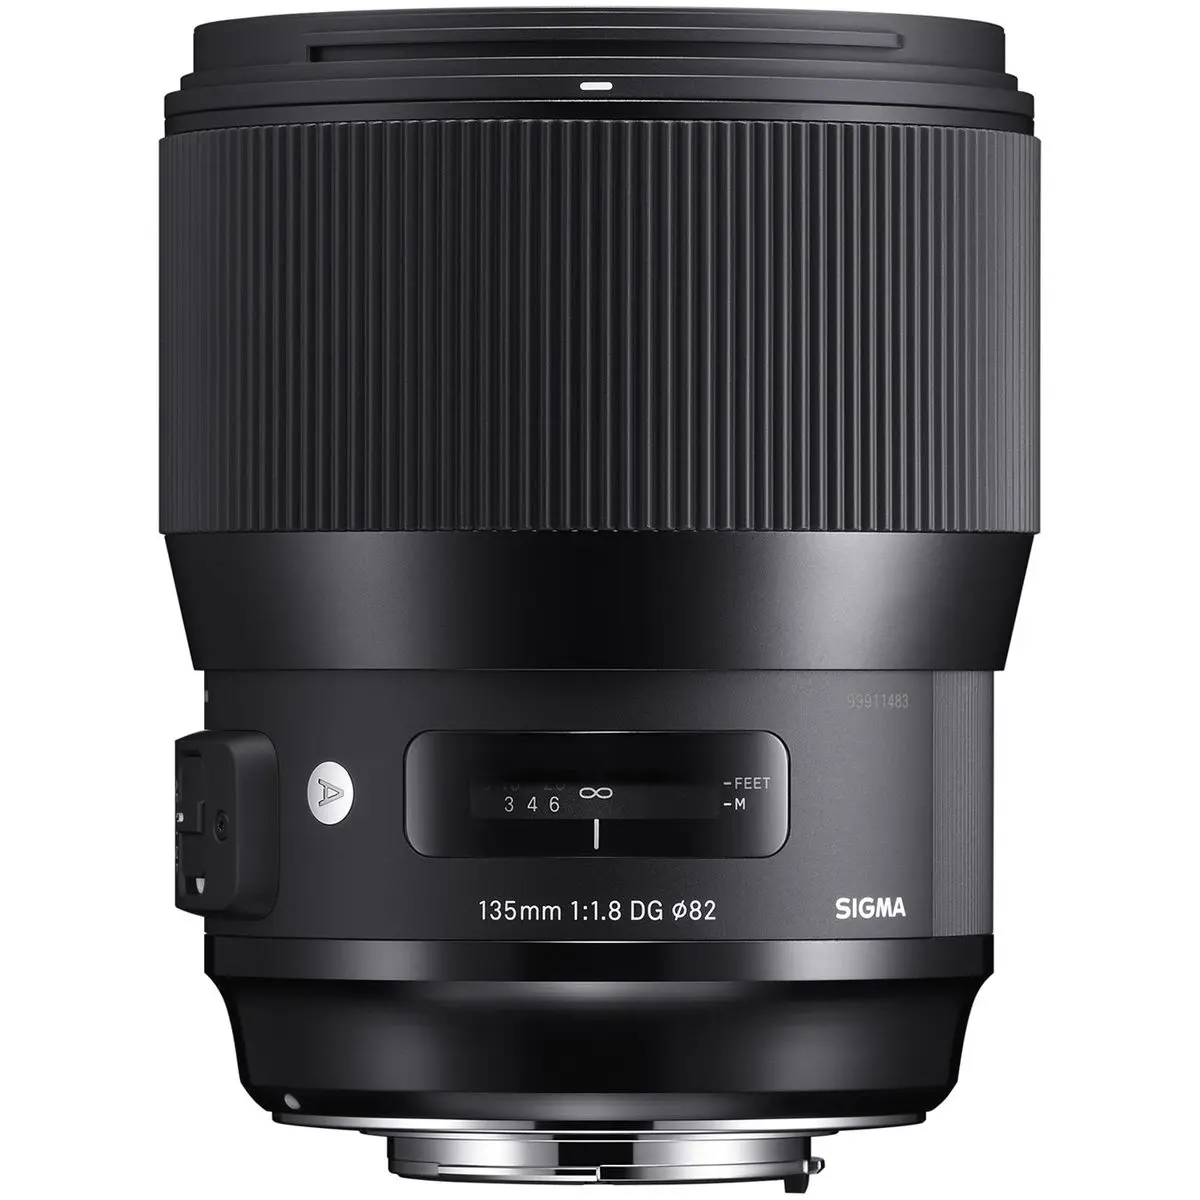 1. Sigma 135mm F1.8 DG HSM | Art (Nikon) Lens